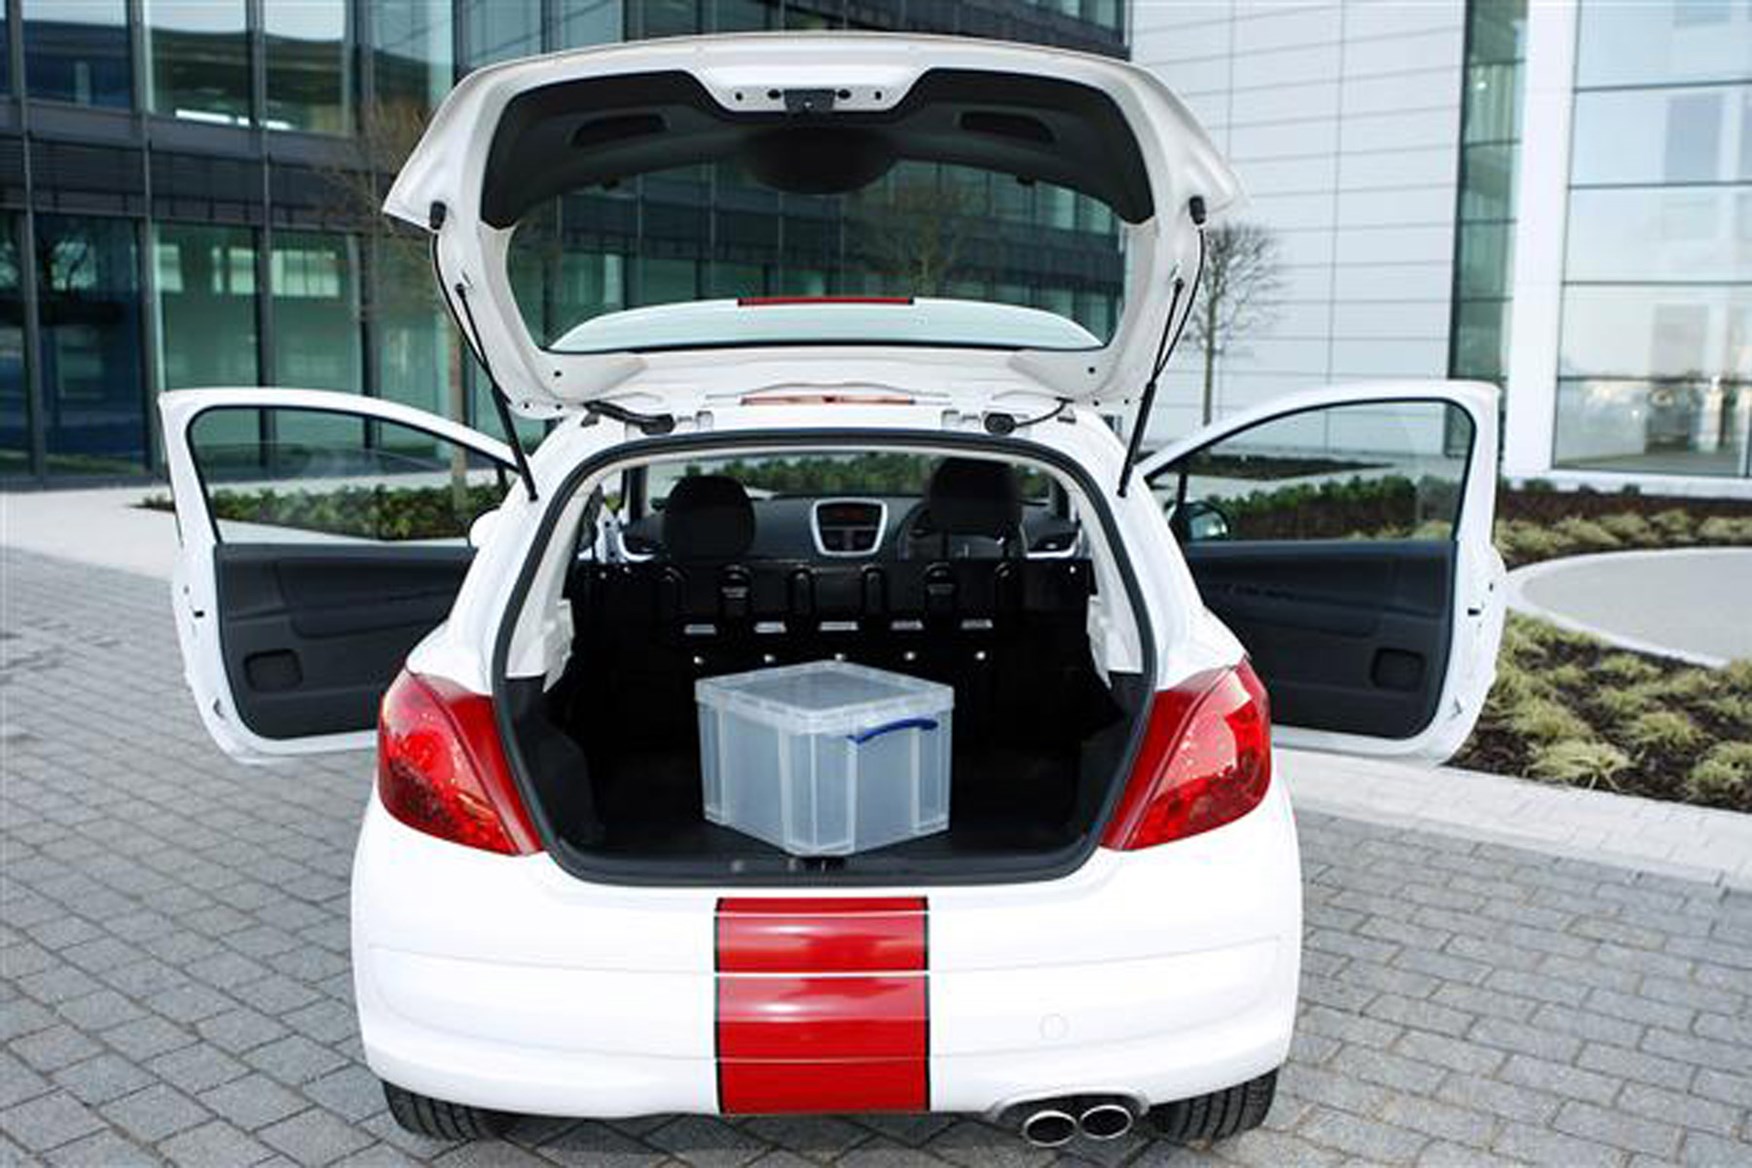 Peugeot 207 Van review on Parkers Vans - load area